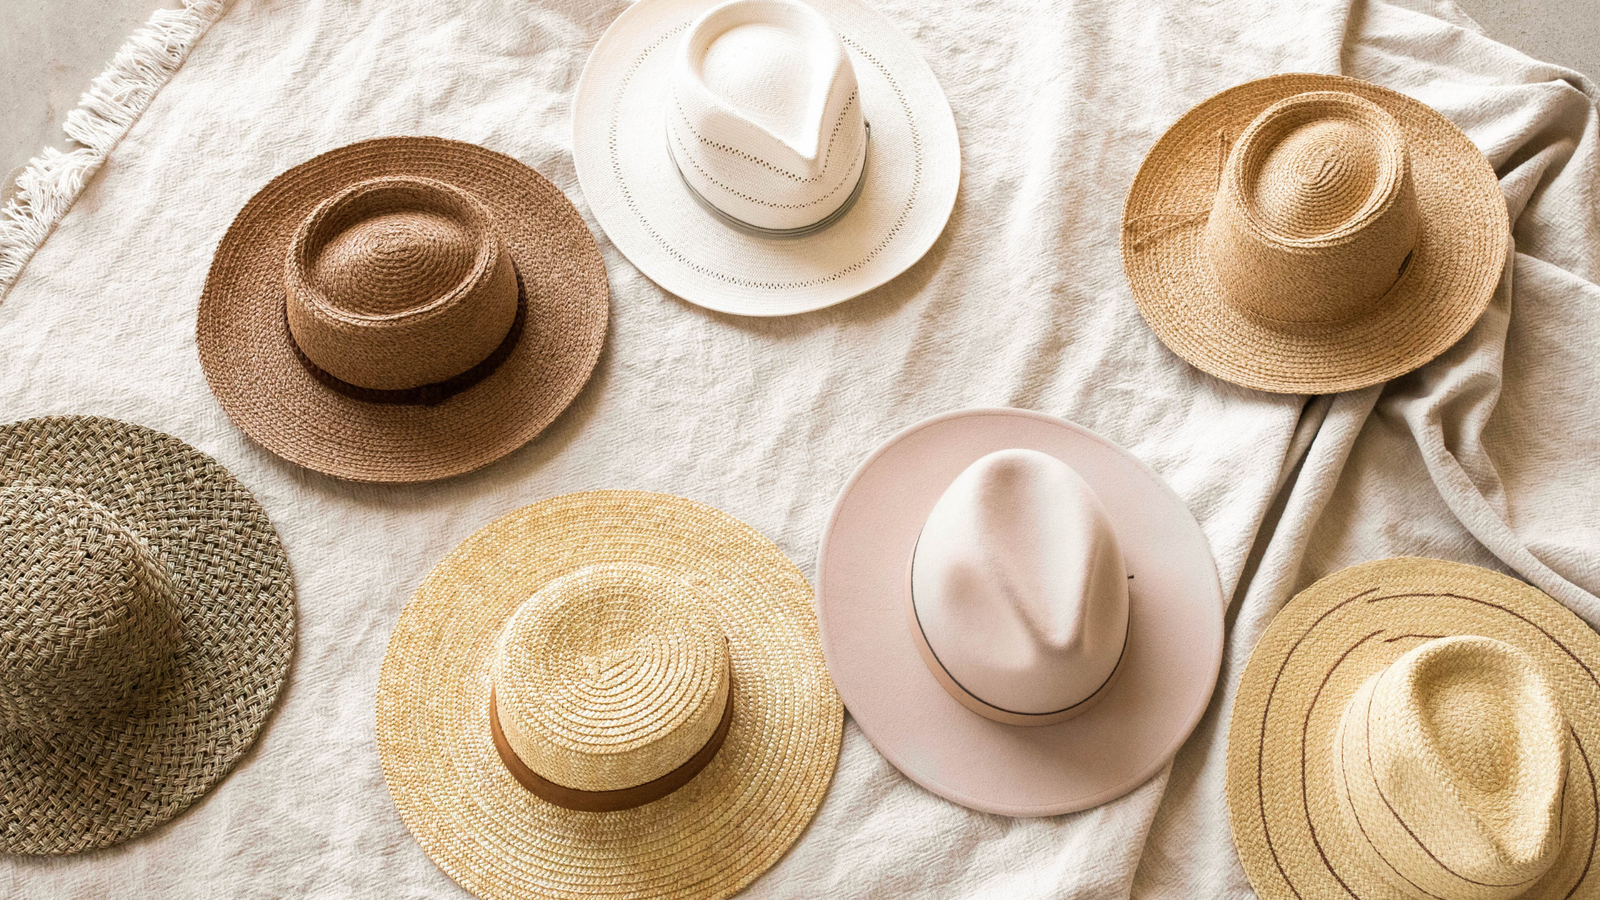 Top 5 Best Sun Hats for Women